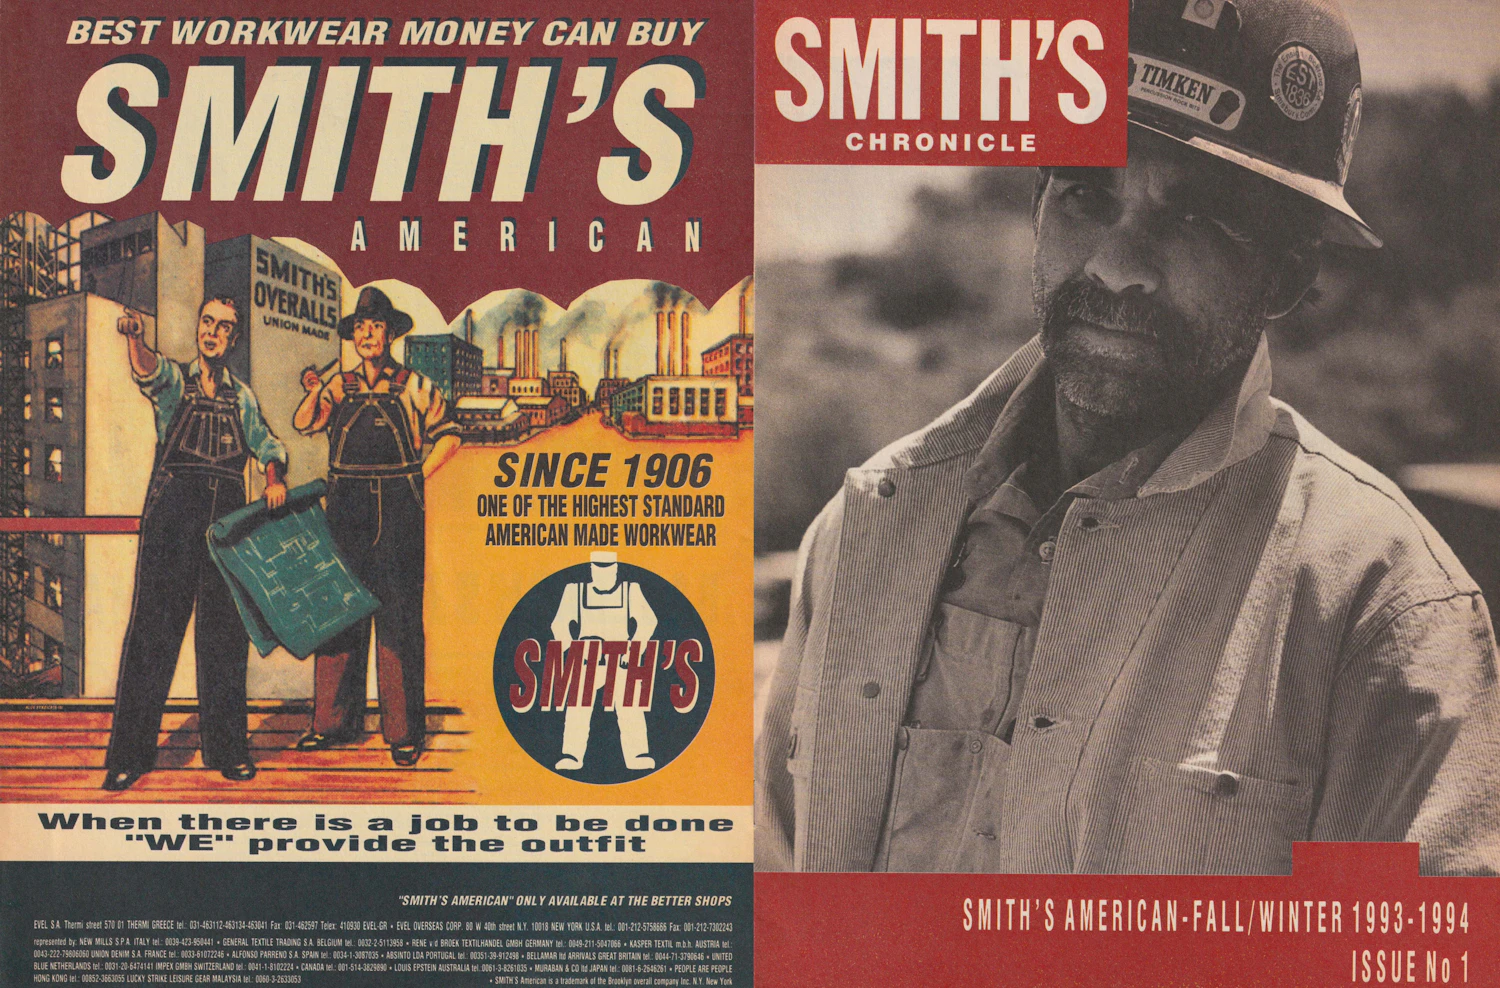 SMITH'S AMERICANの1993年秋冬のカタログ